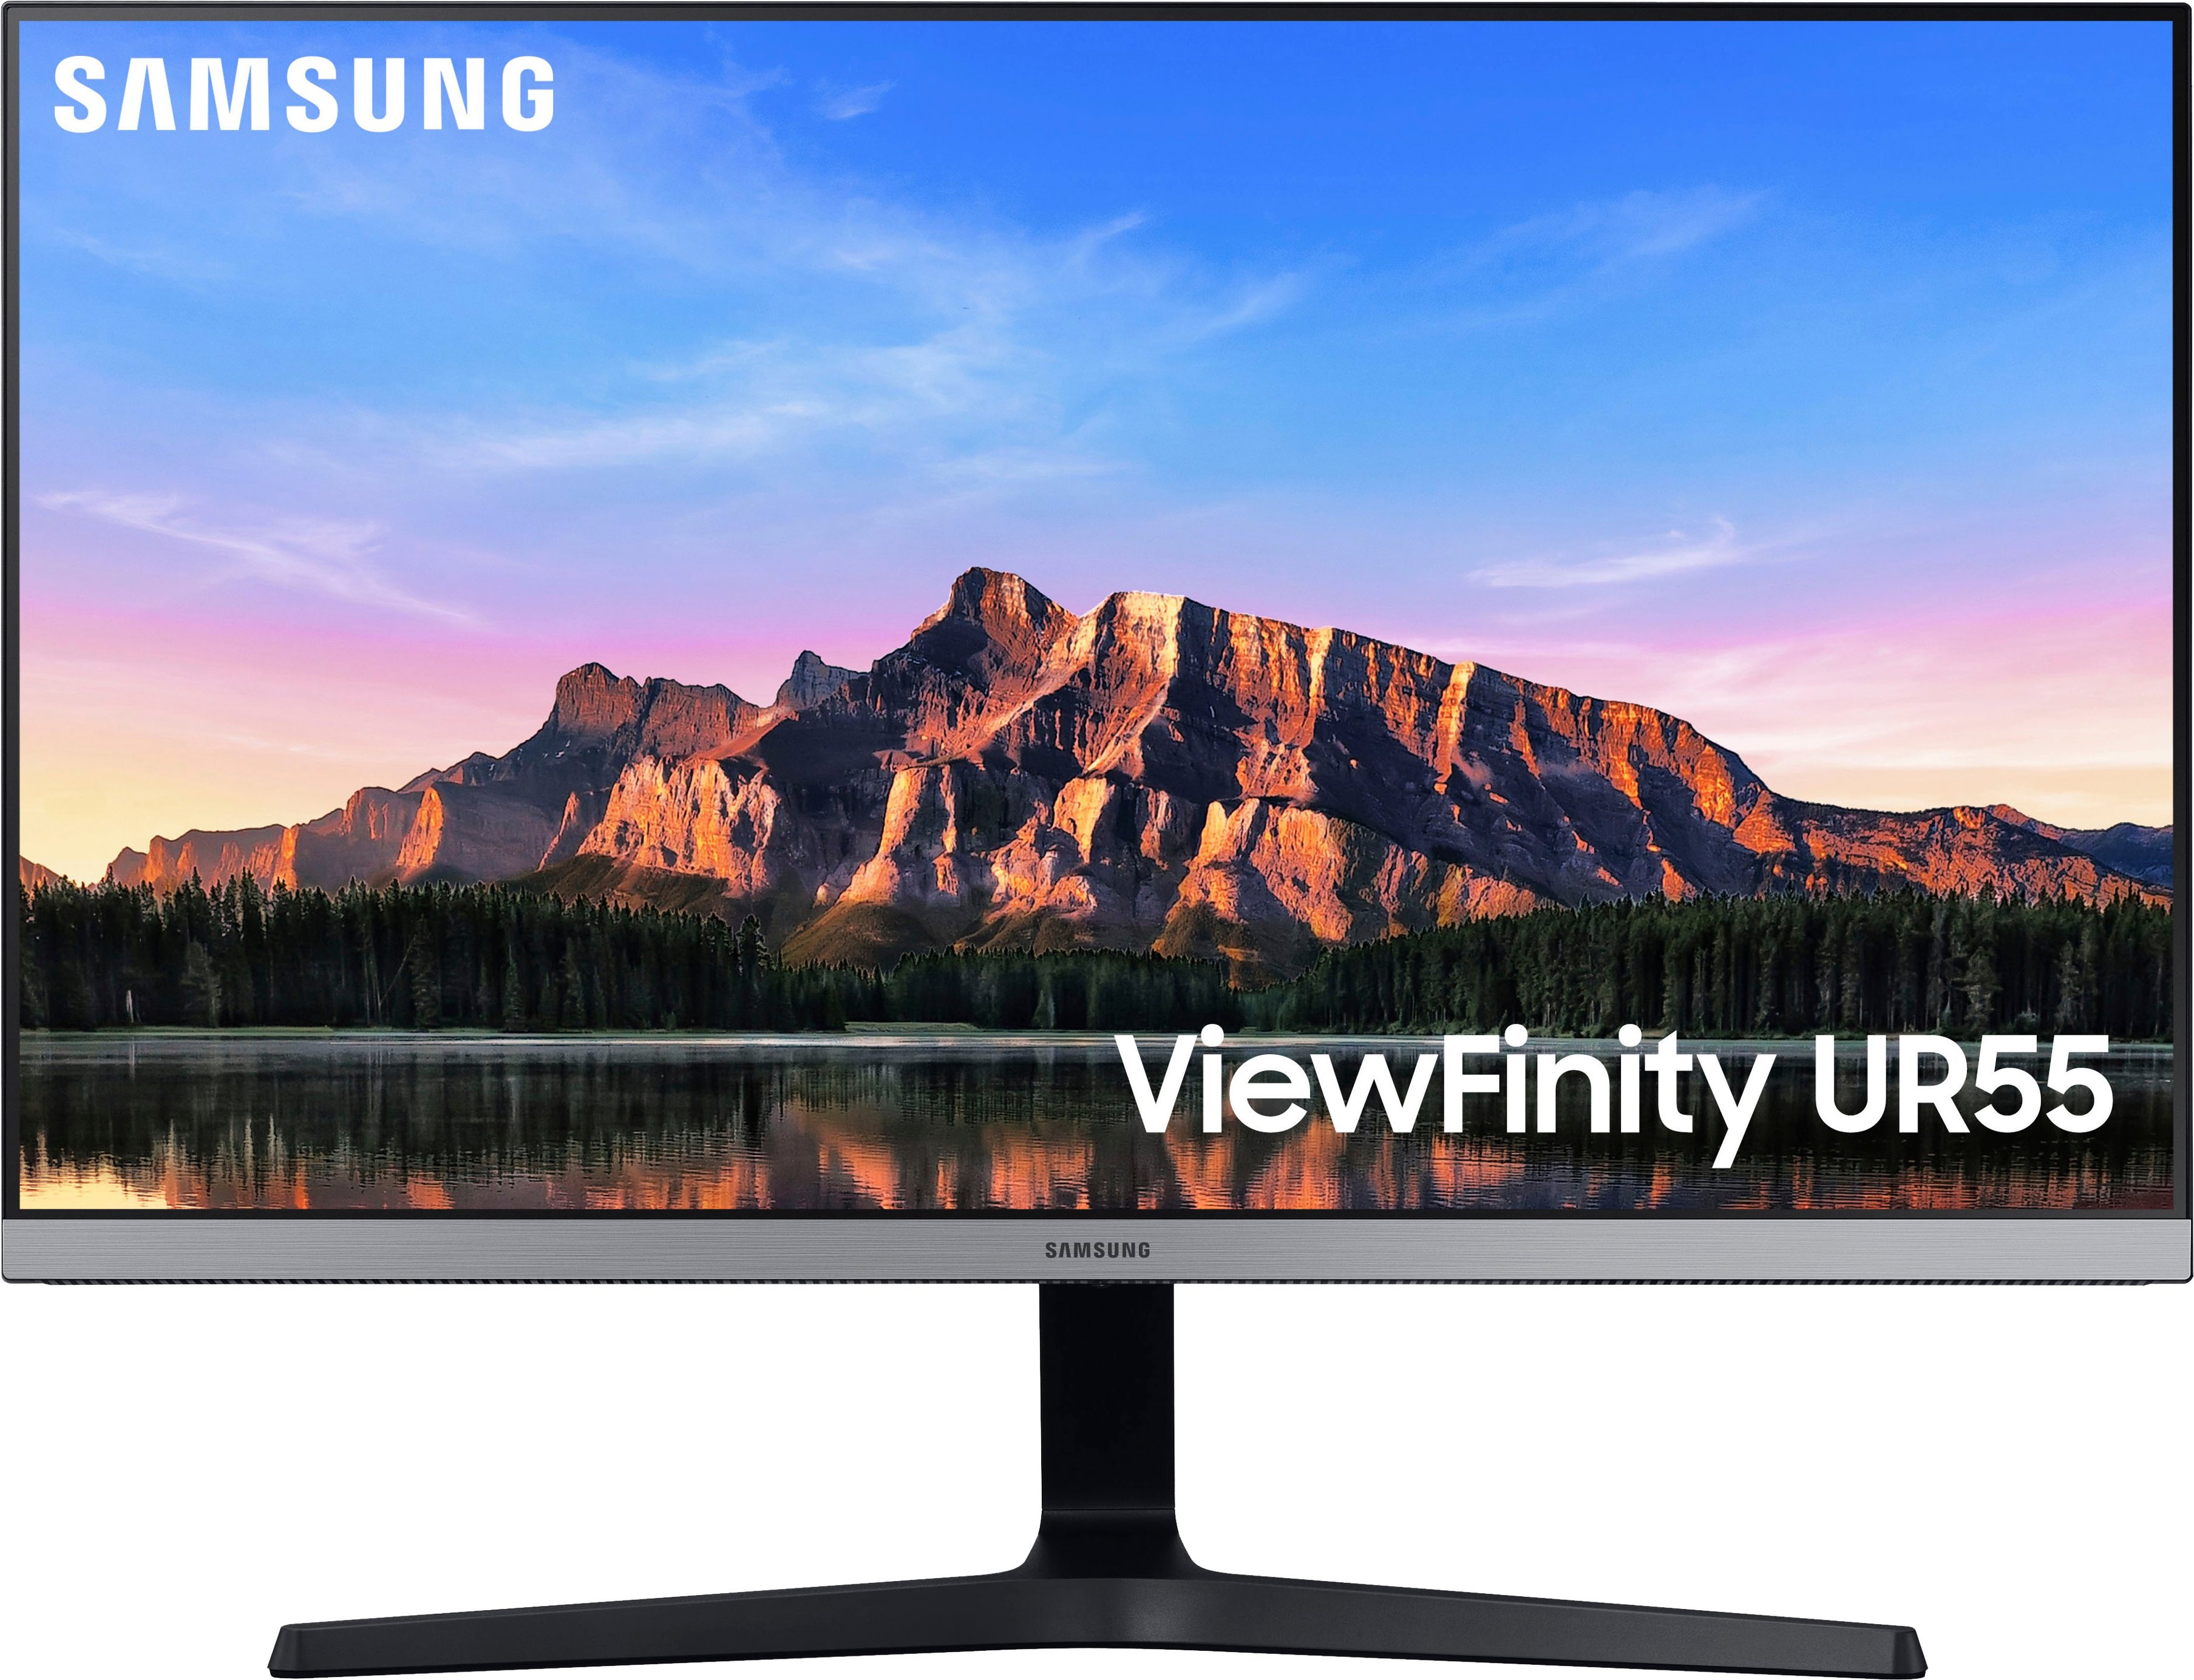 Samsung - 28” ViewFinity UHD IPS AMD FreeSync with HDR Monitor - Black